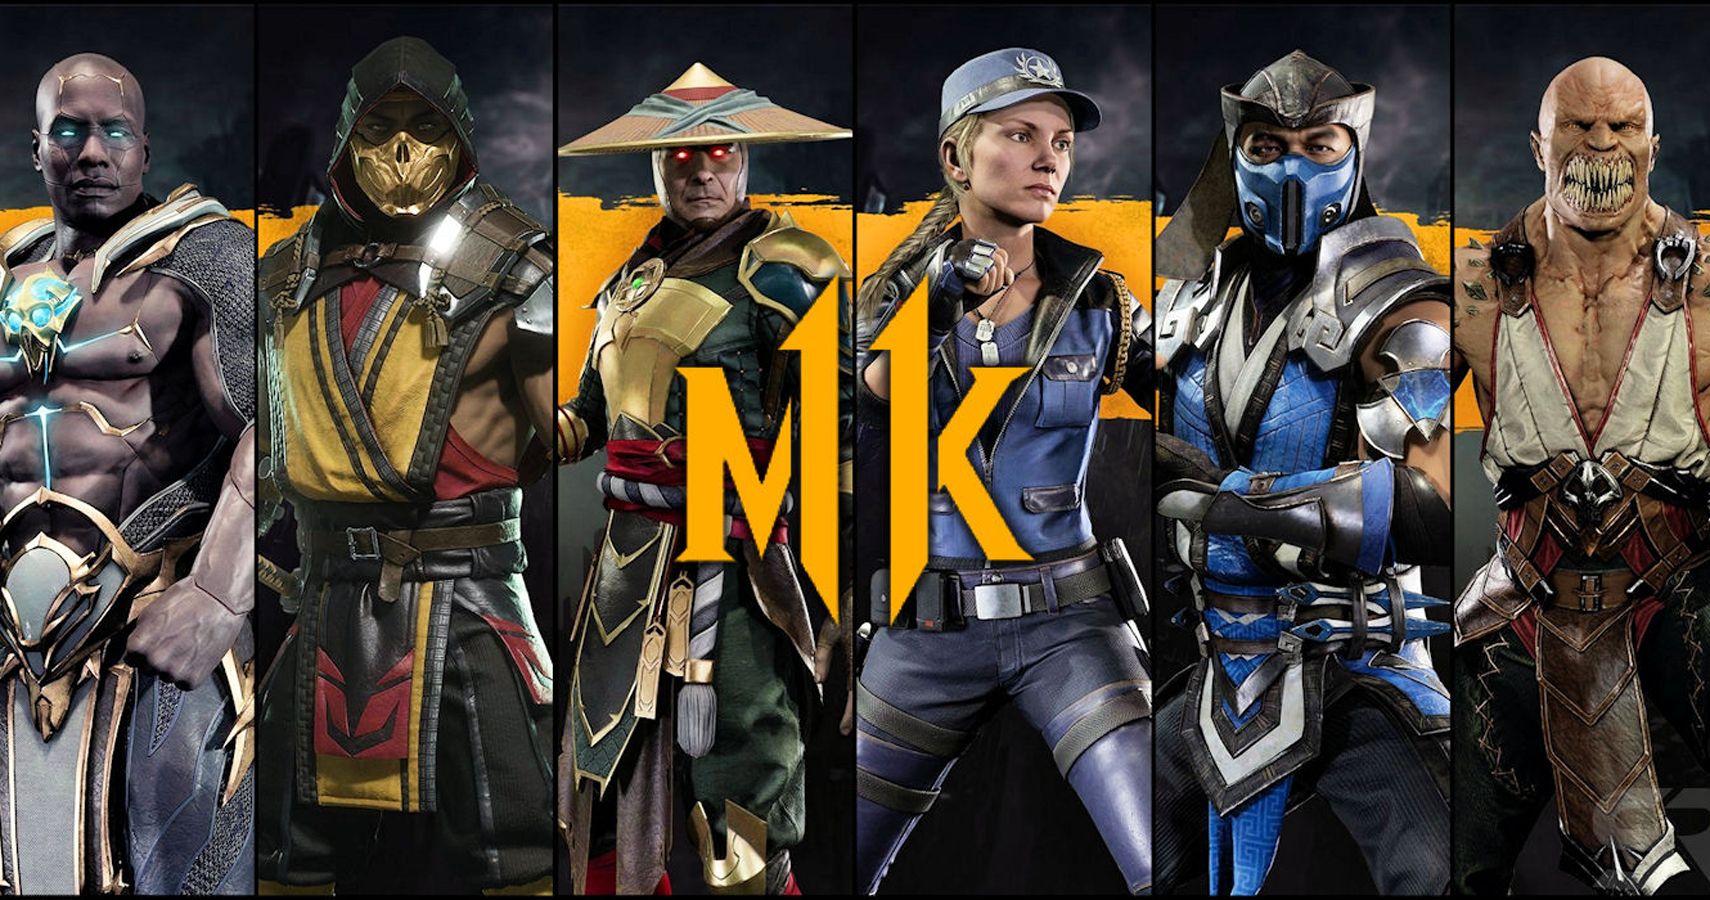 Update: Who were the best DLC Mortal Kombat 11 DLC characters?